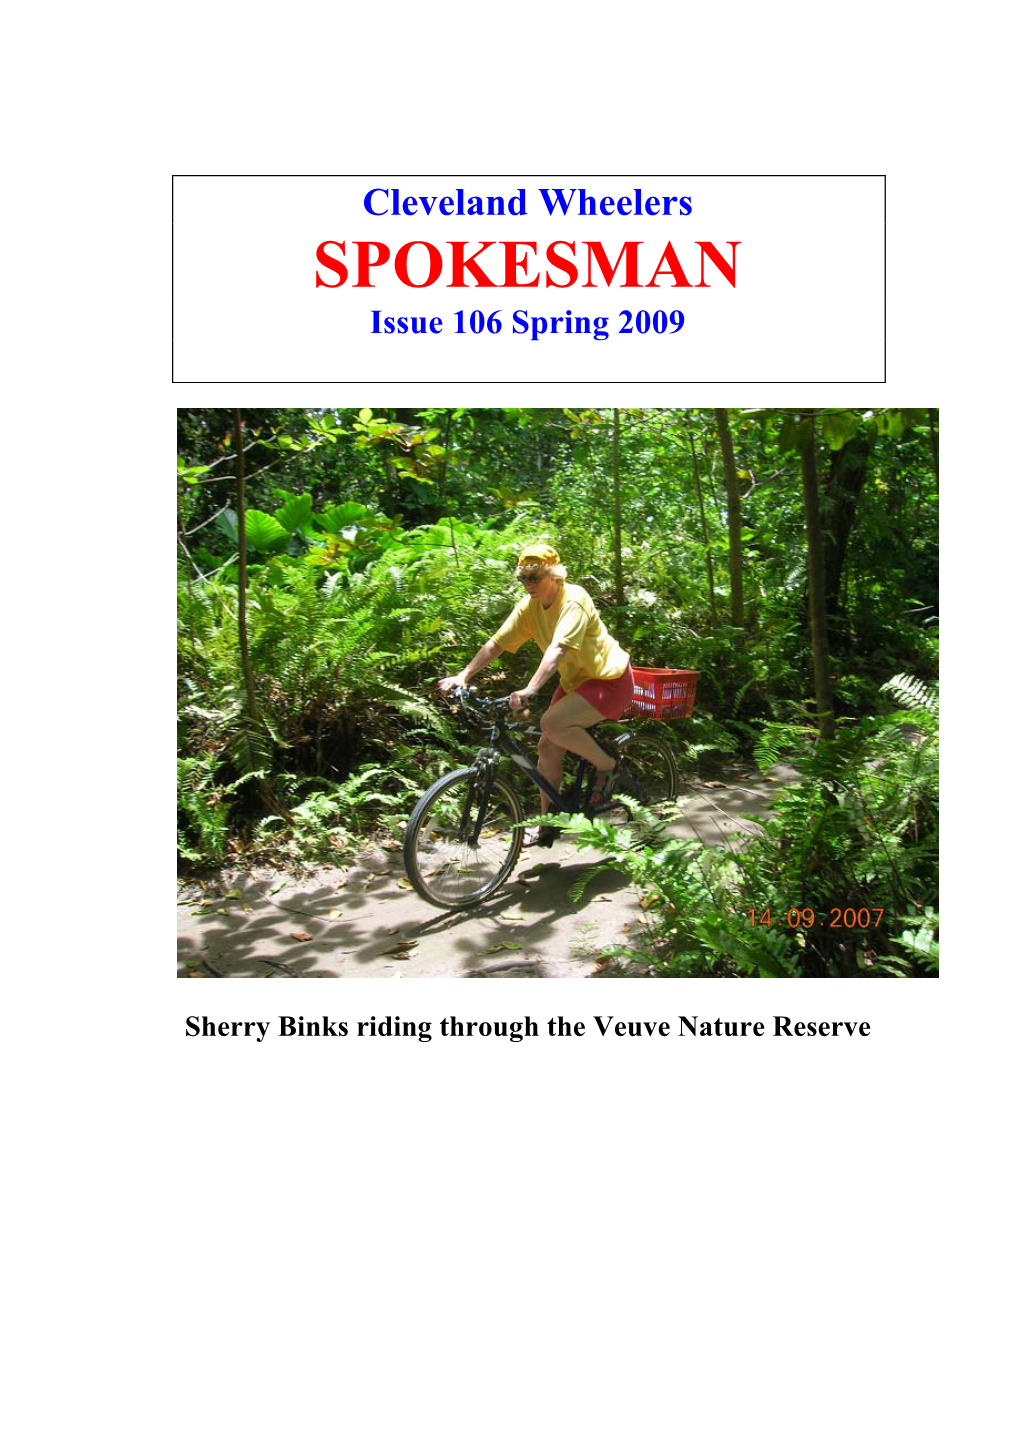 SPOKESMAN Issue 106 Spring 2009